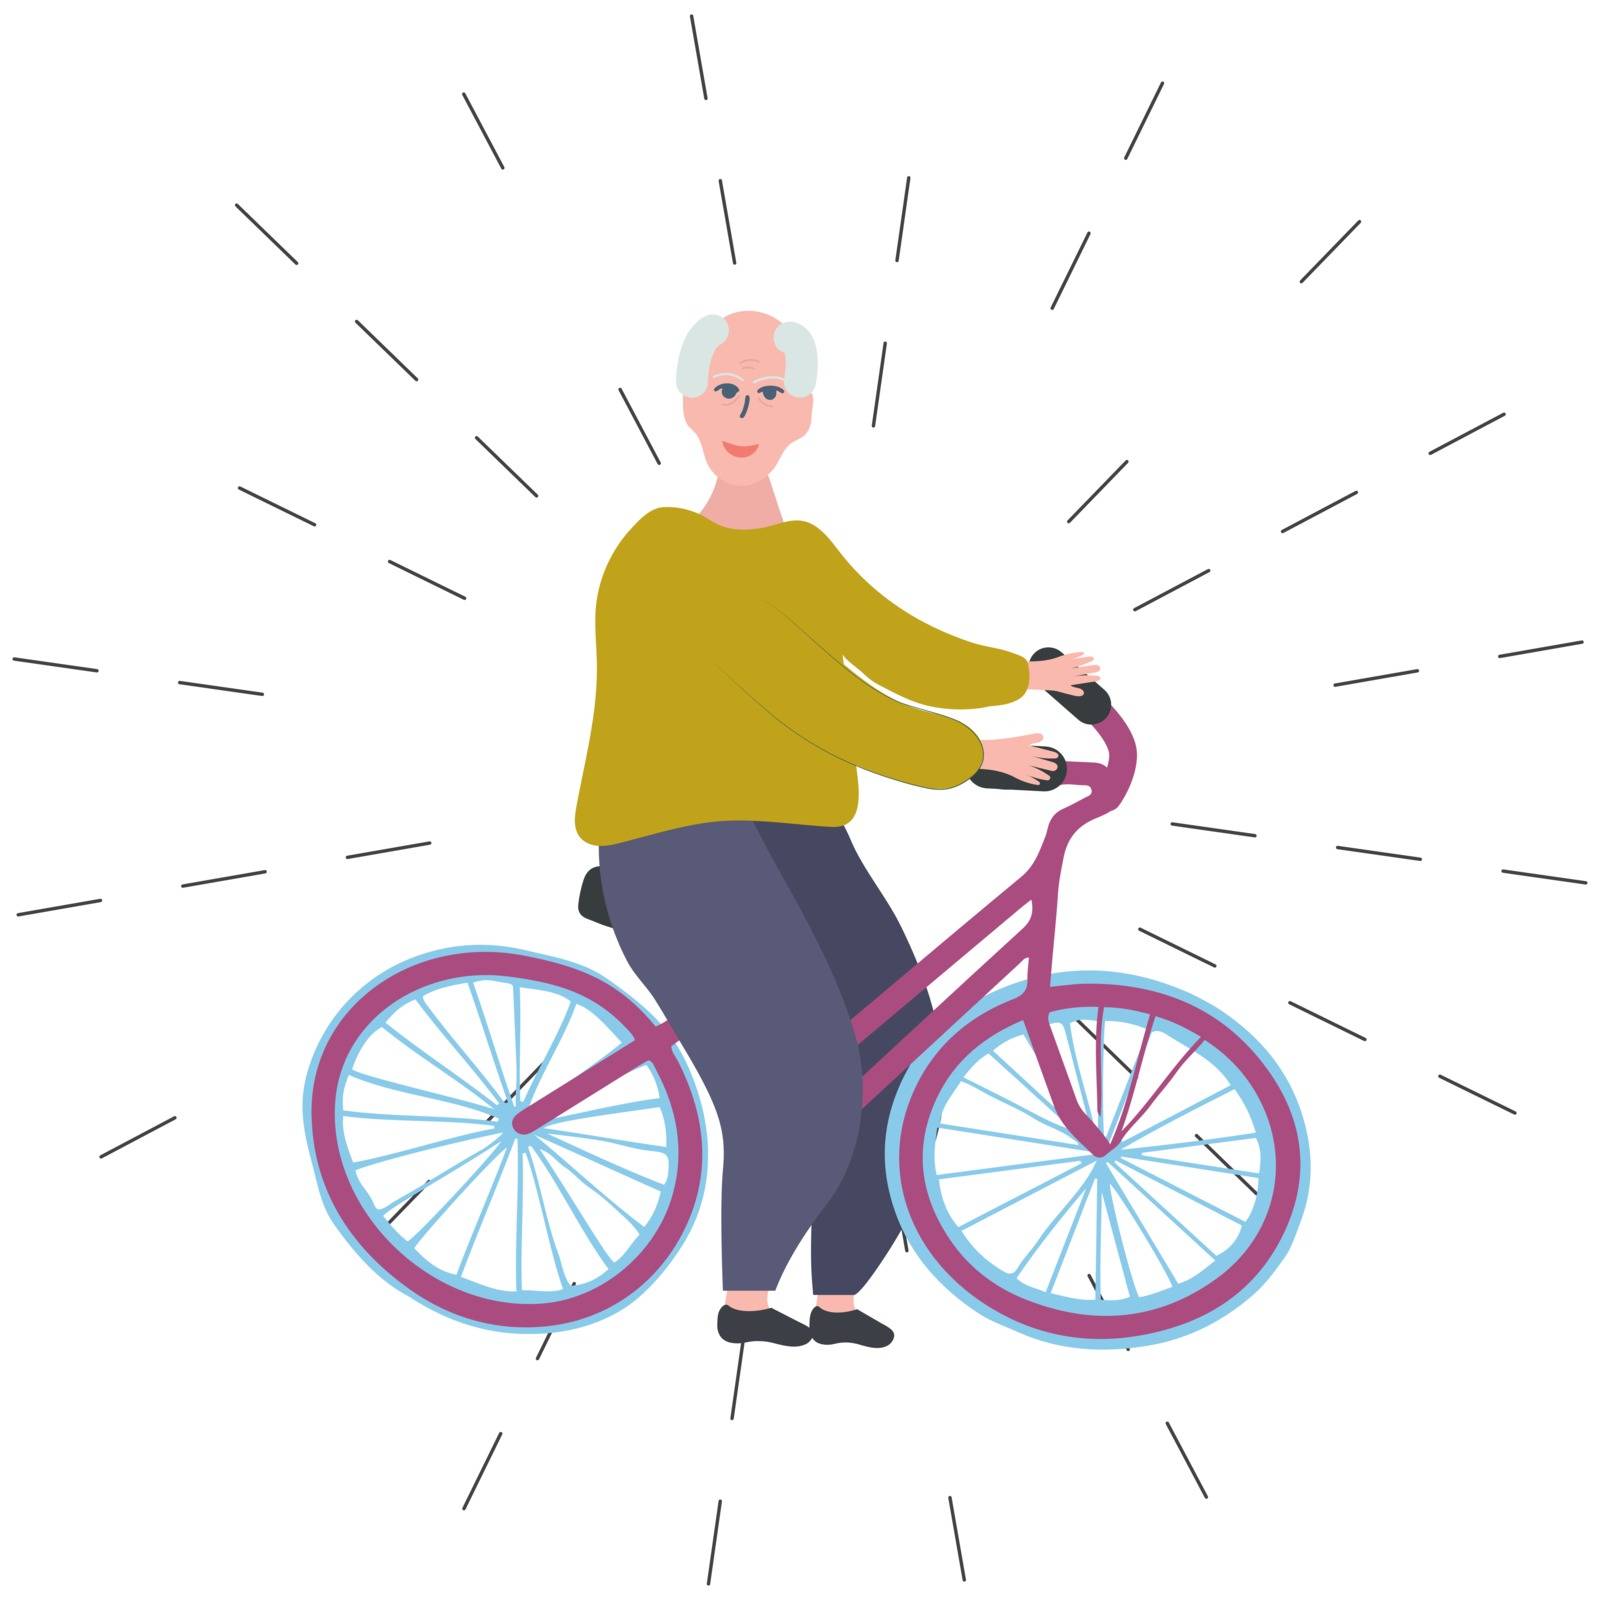 Elderly man on a bike. by Nata_Prando